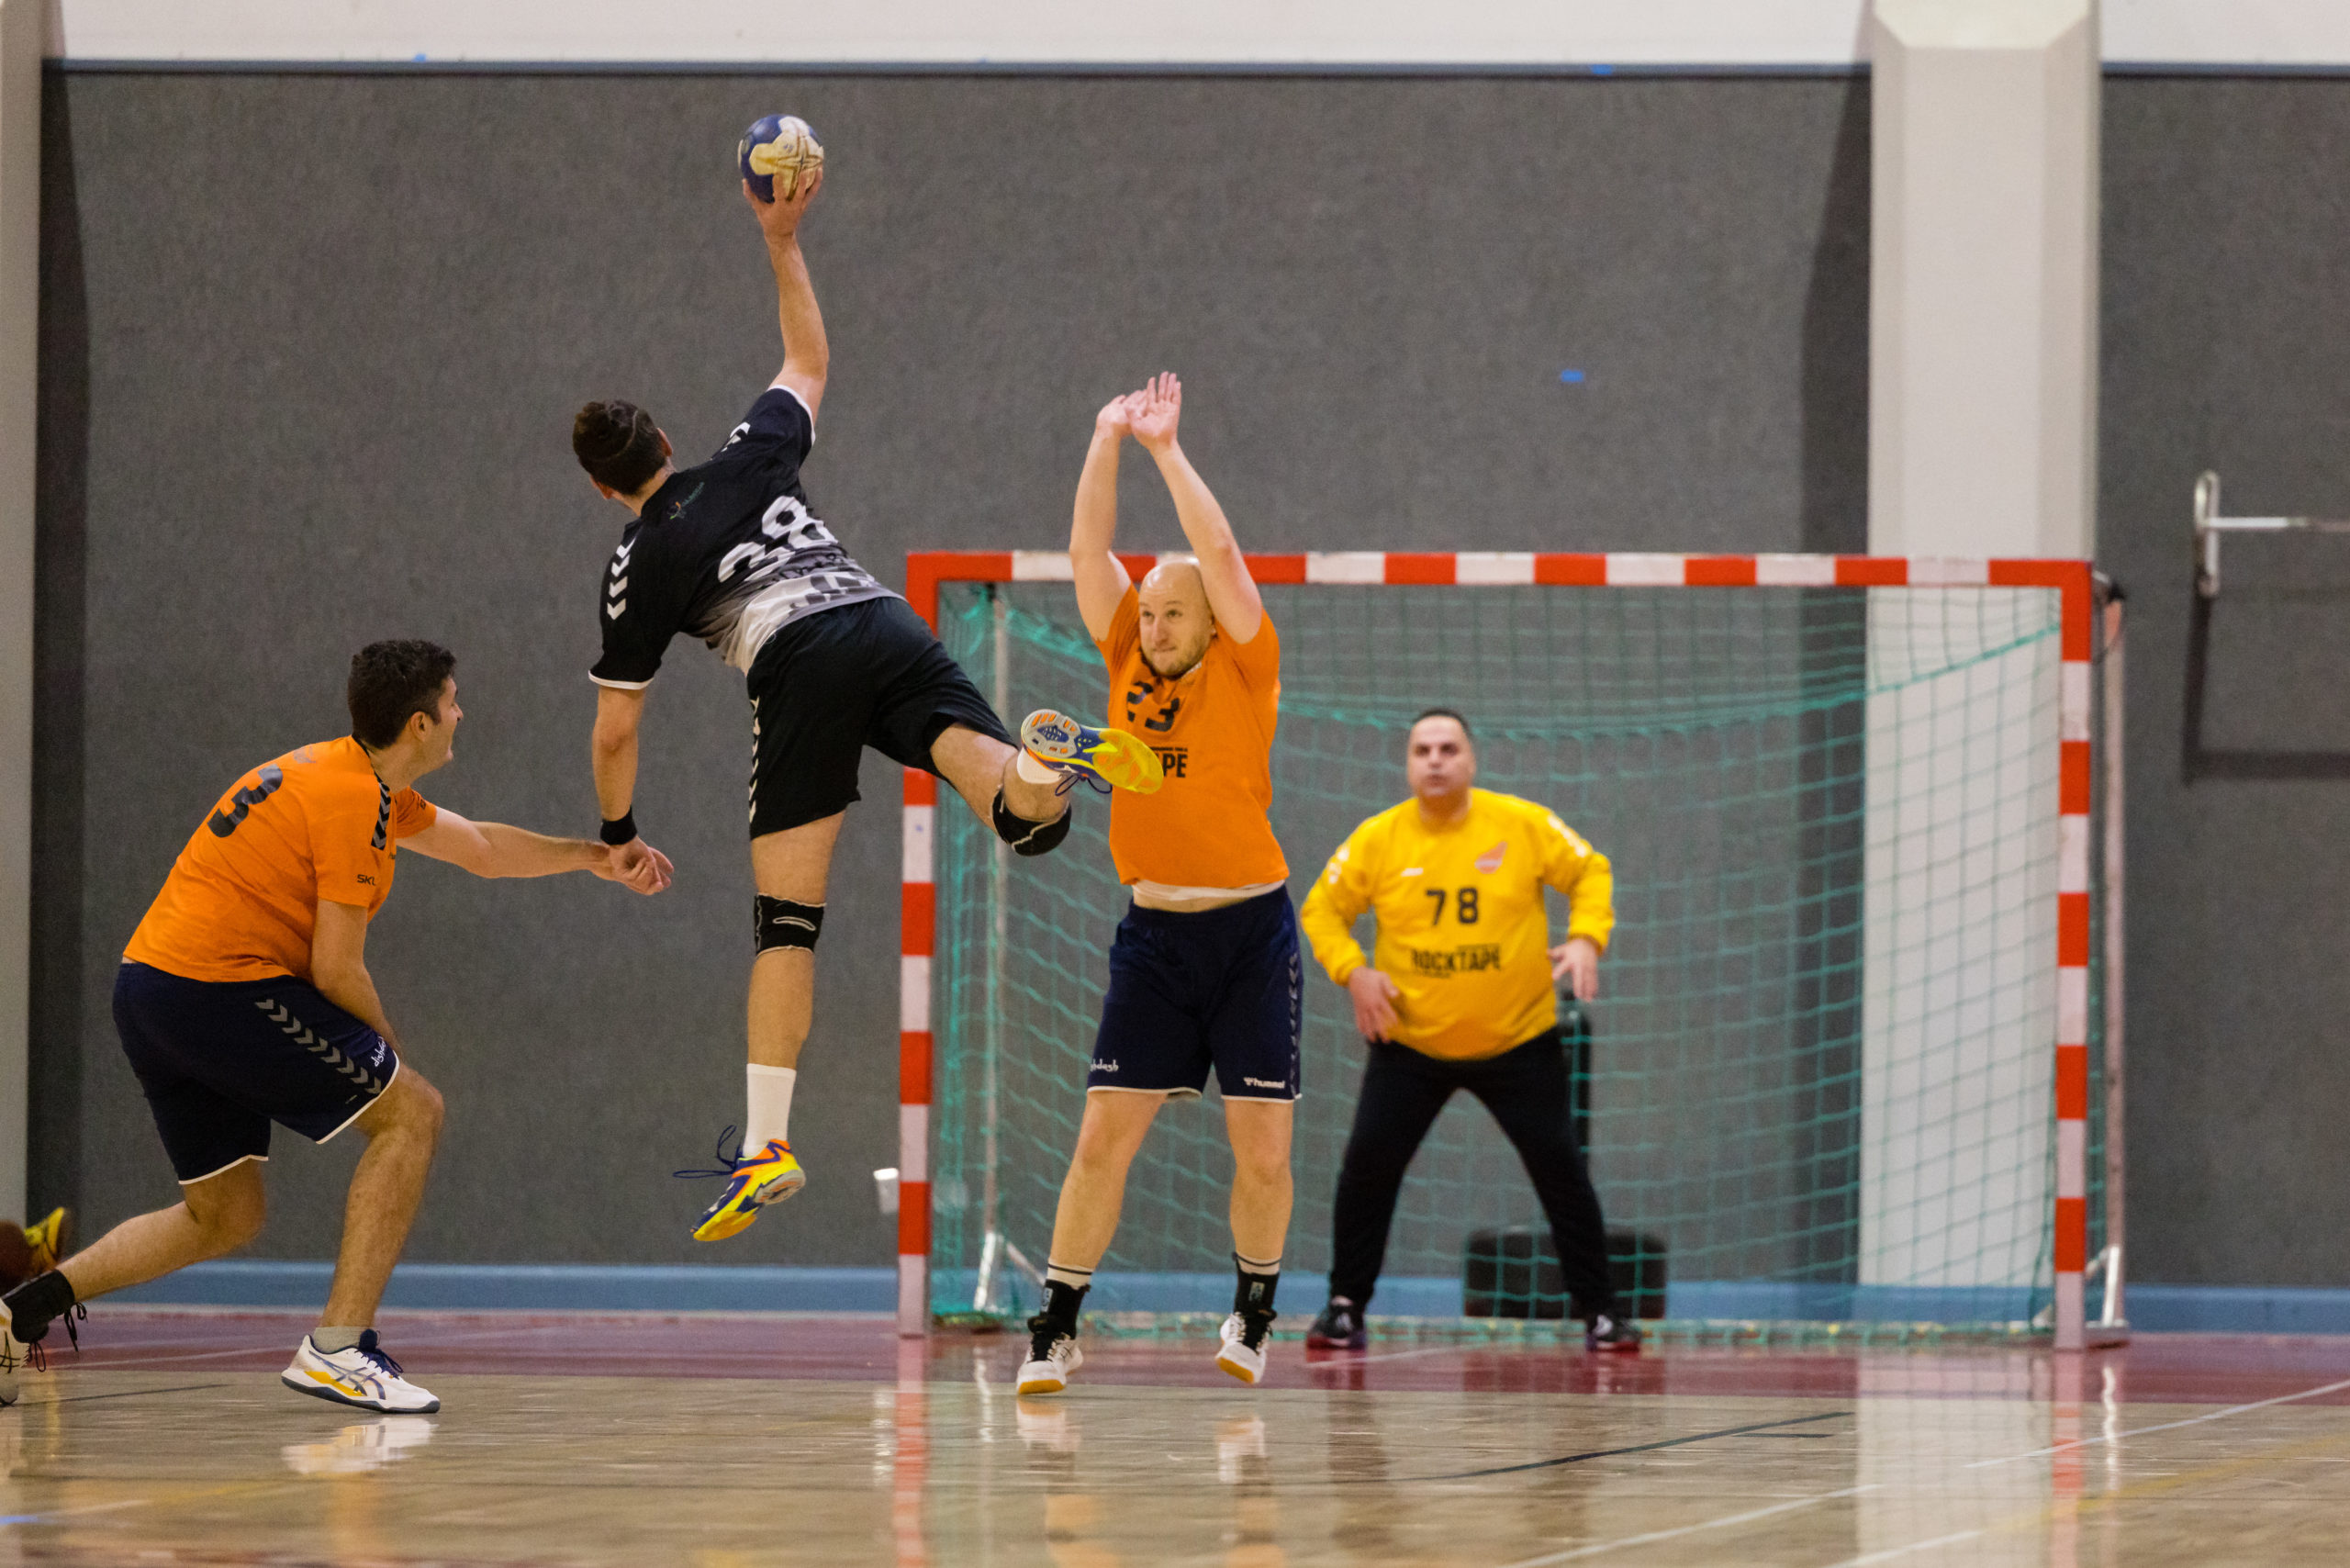 Handball – The Premier Handball Club